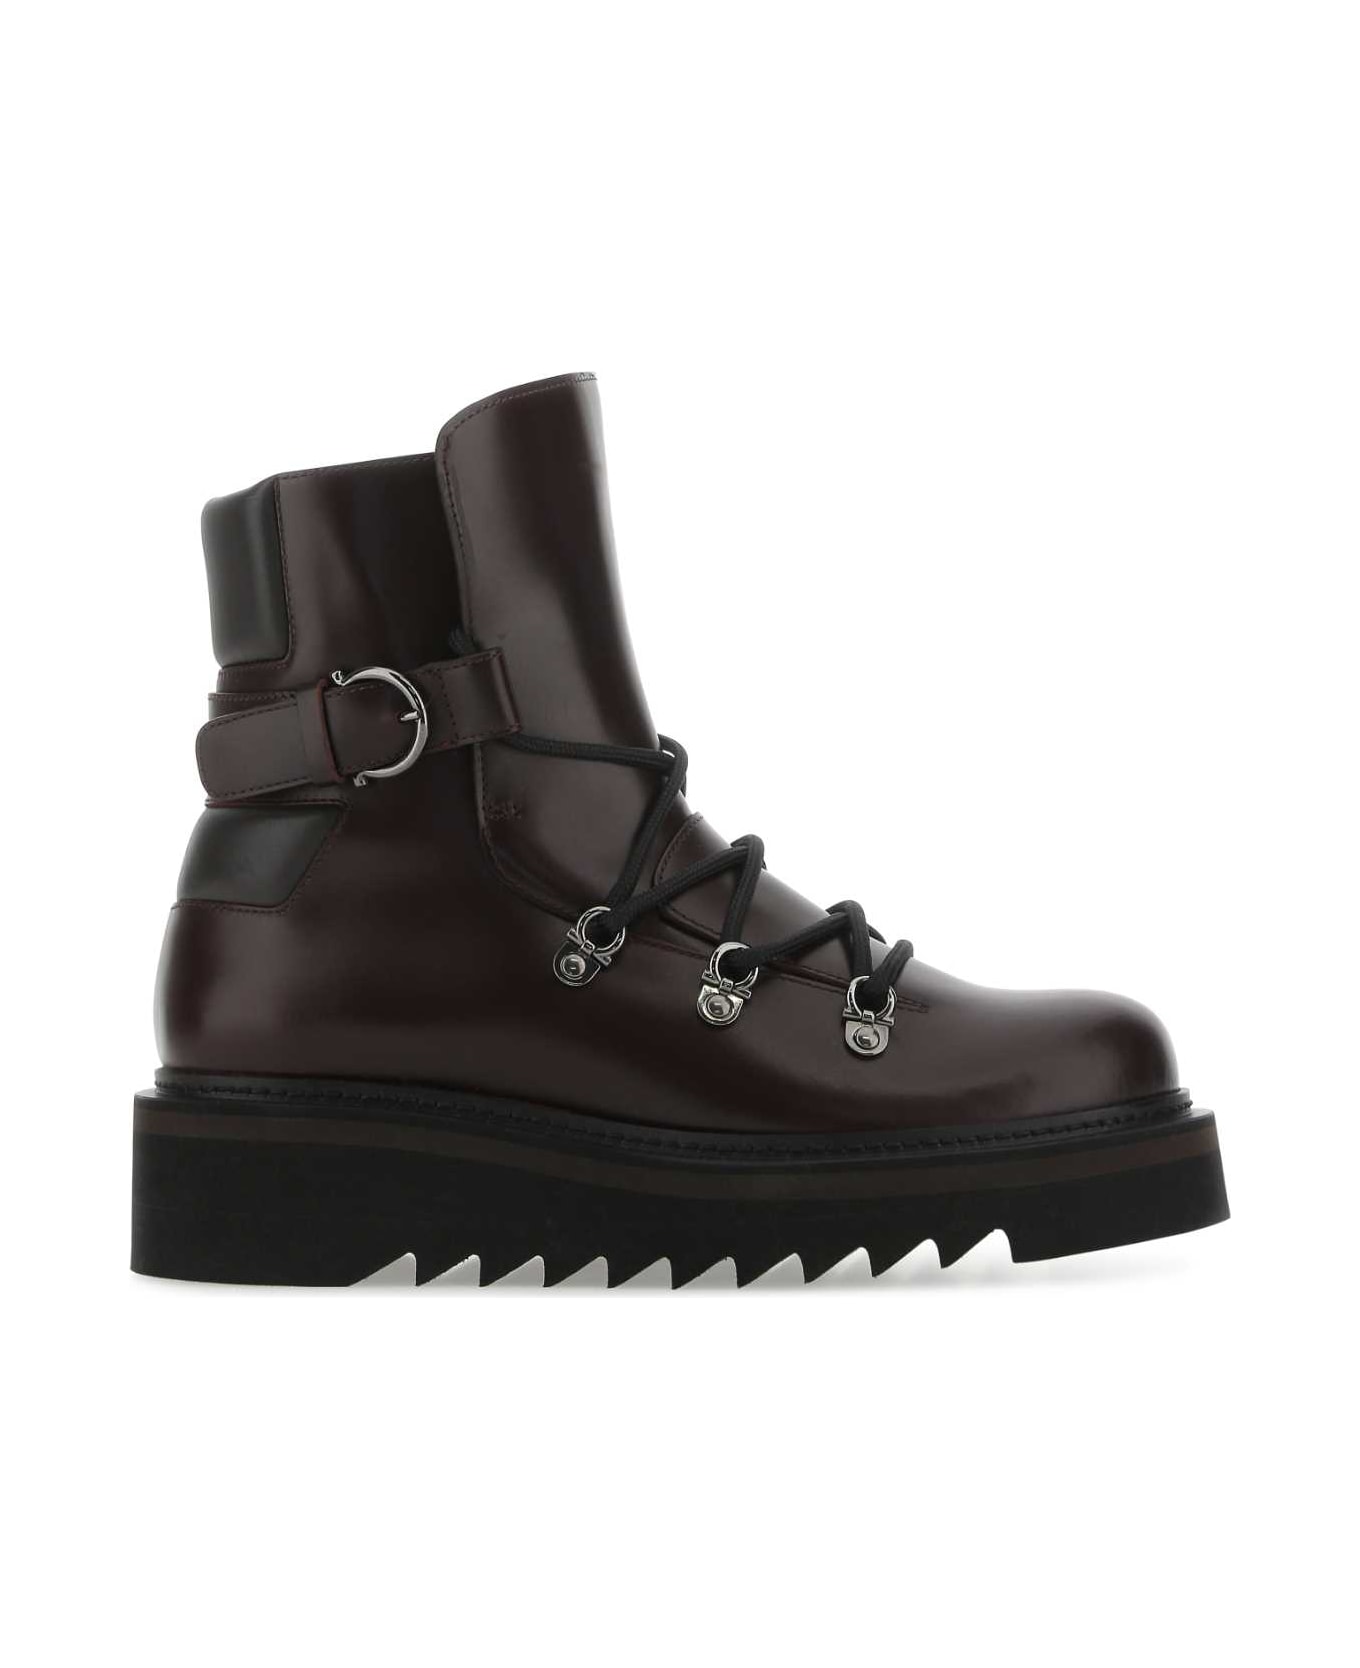 Ferragamo Aubergine Leather Elimo Ankle Boots - GANACHEBROWN ブーツ